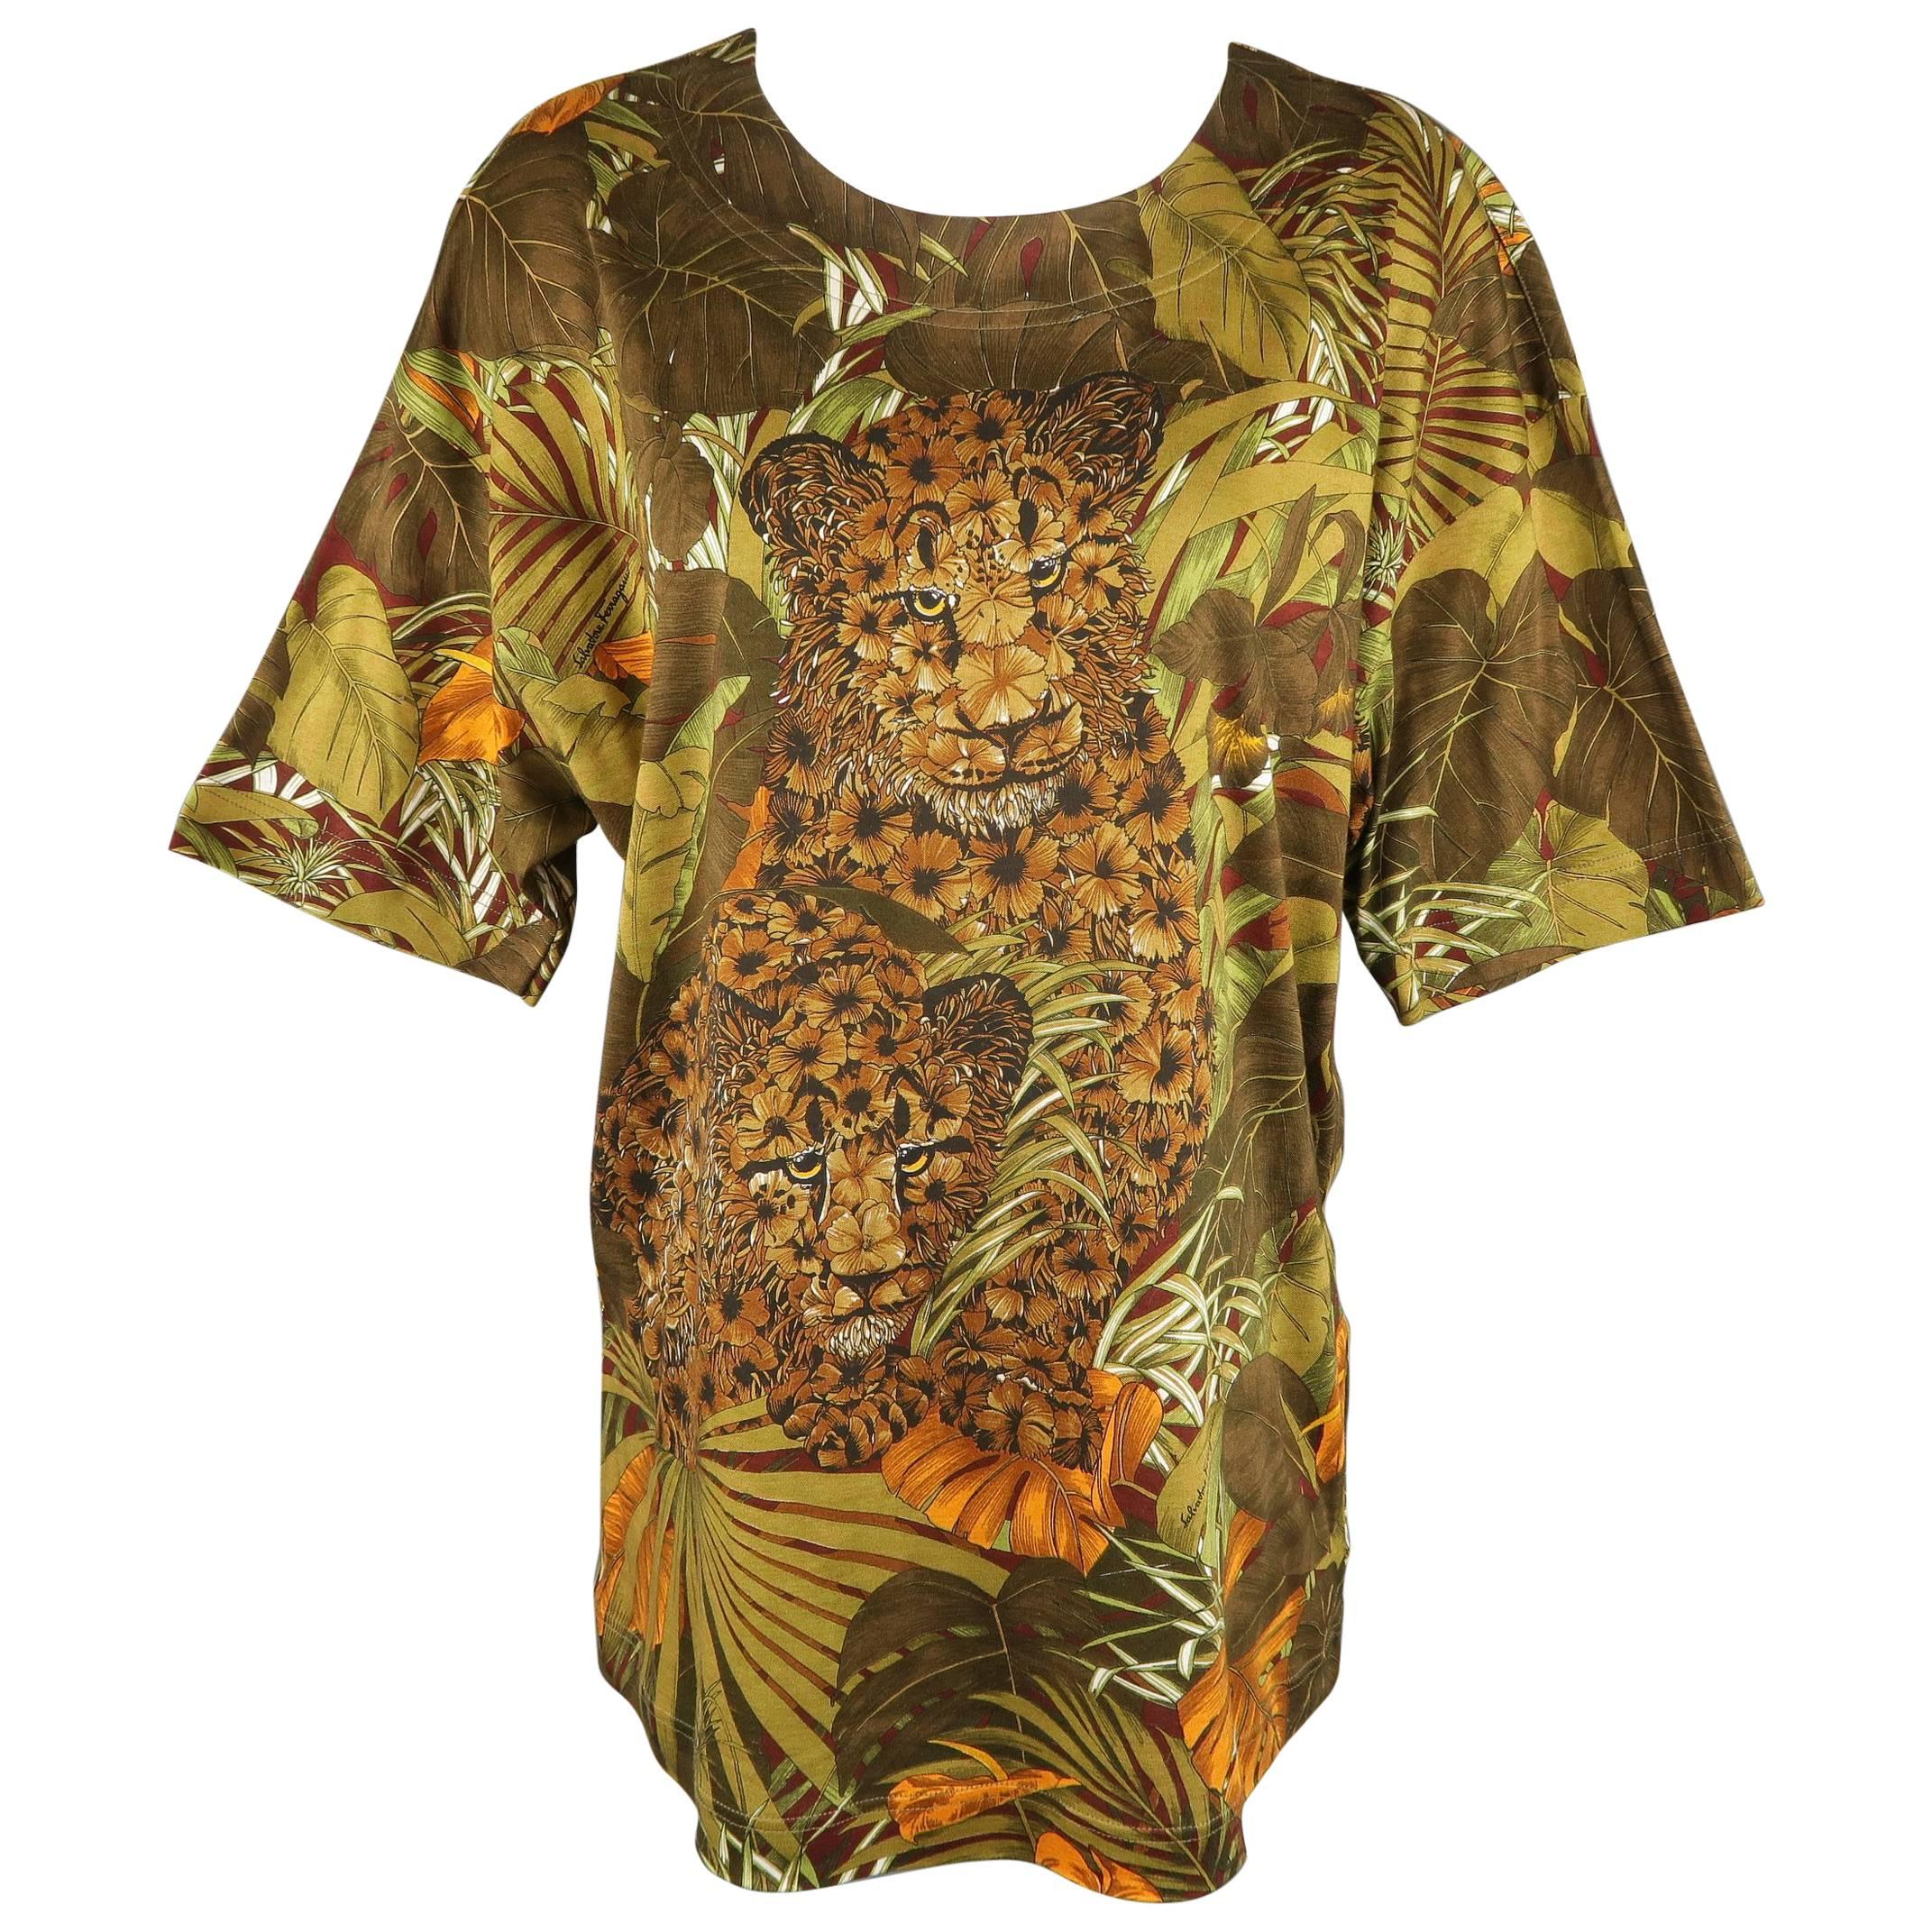 SALVATORE FERRAGAMO Size XS Olive Leaves & Tigers Jungle Print Cotton T-shirt